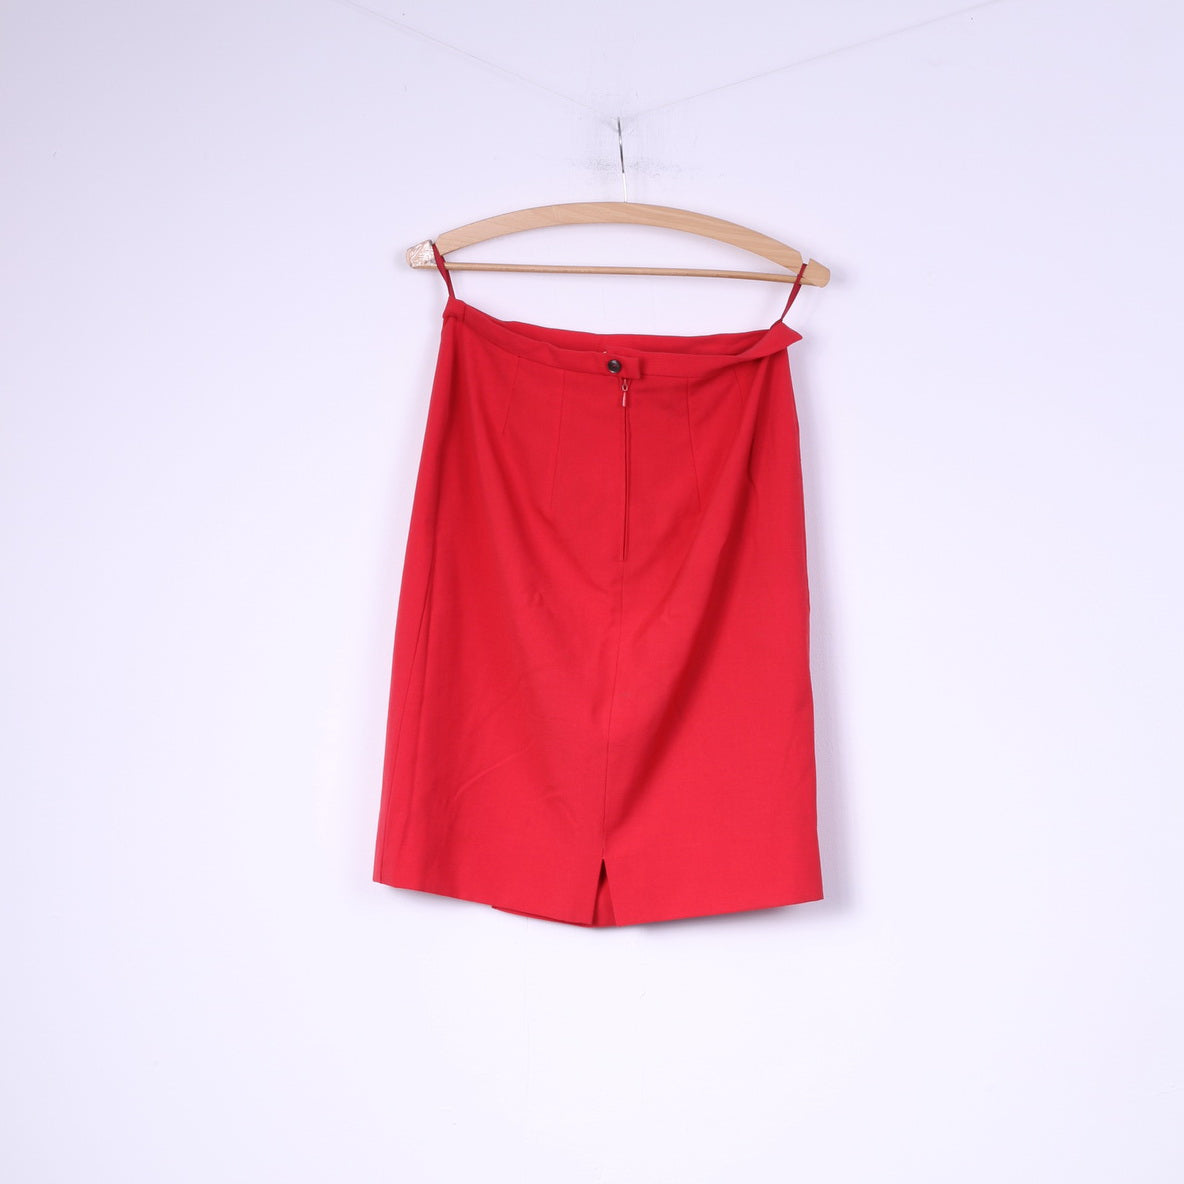 Astor Modelle Women 40 Skirt Suit Vintage Skirt Red Wool 2 Piece Trevira